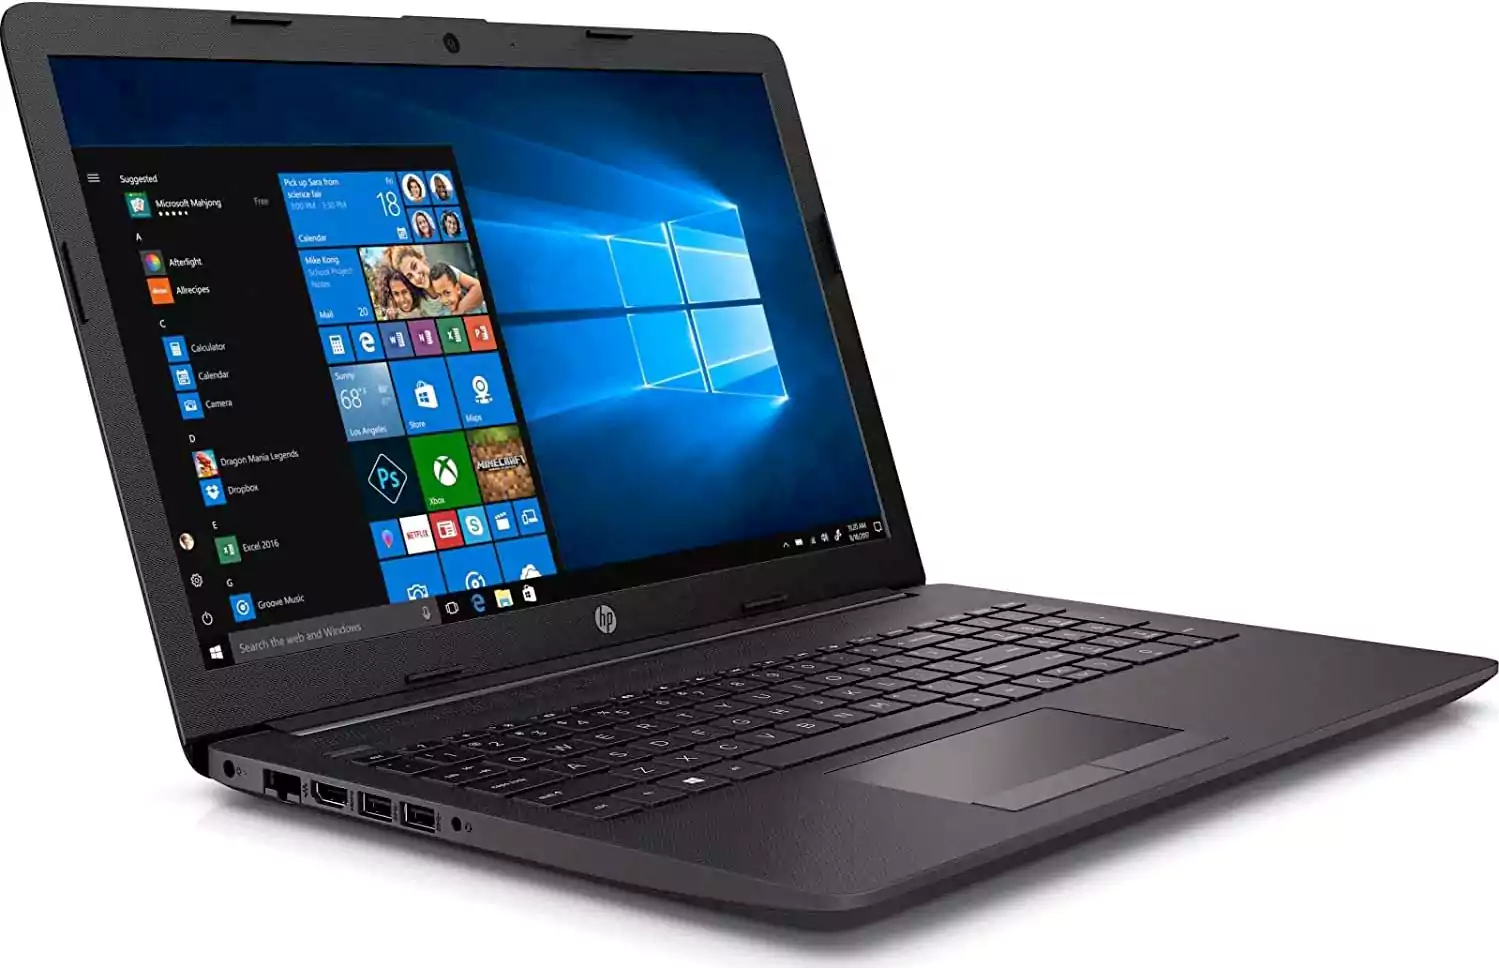 HP 250 G7 Laptop, Intel® Core™ i5-10210U, 10th Gen, 8GB RAM, 1TB HDD, NVIDIA® GeForce MX110 2GB DDR5, 15.6 Inch HD, Windows 10, Black